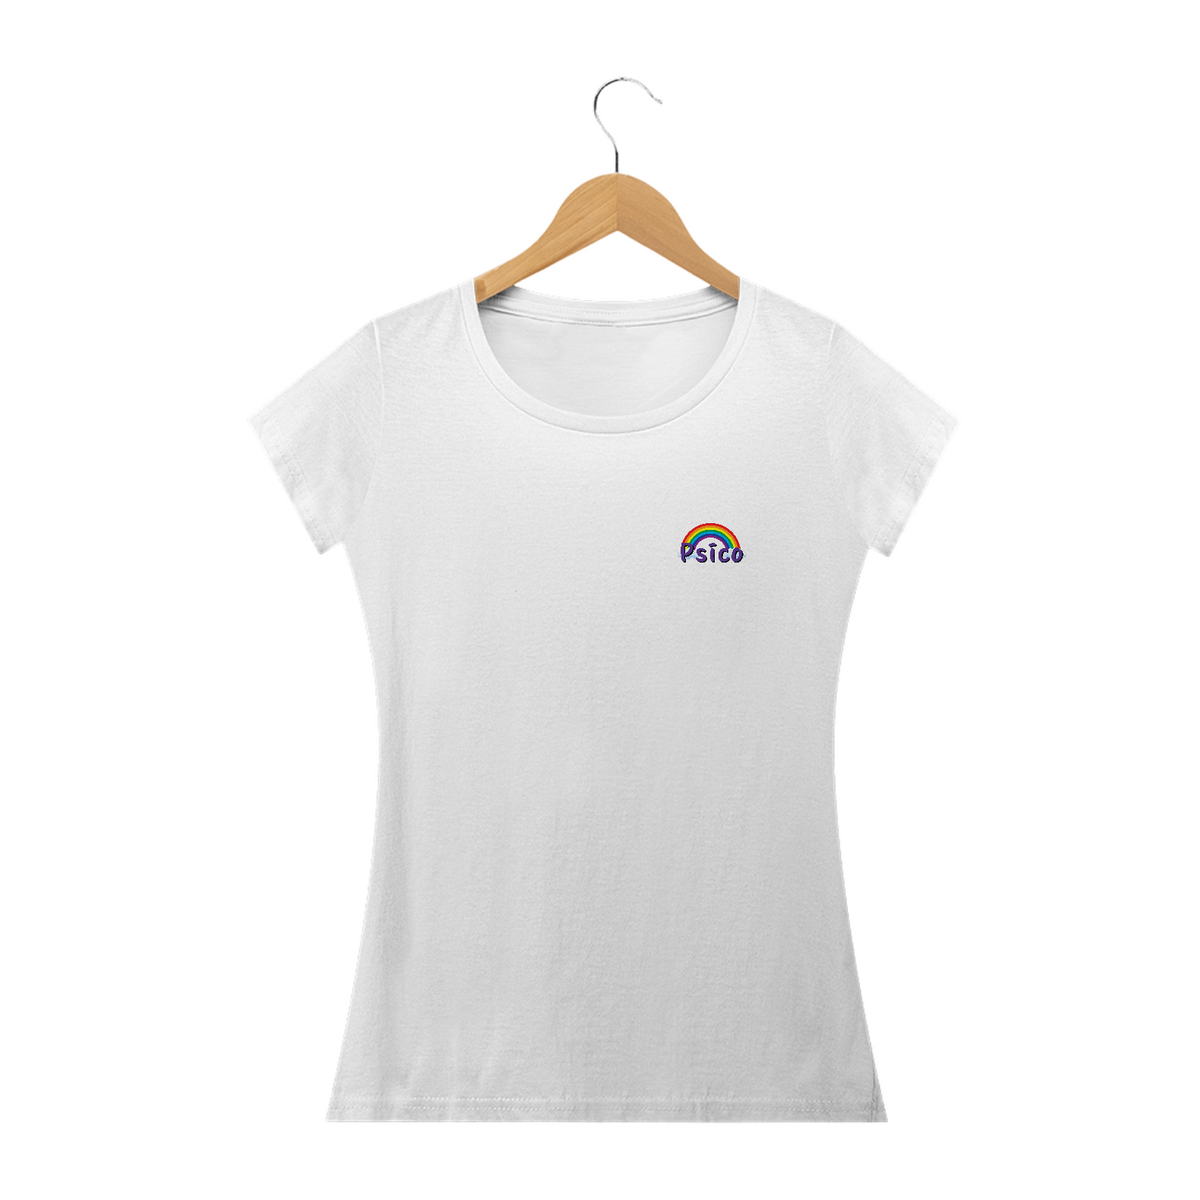 Nome do produto: Psico | Arco íris -  Camiseta Baby long Básica